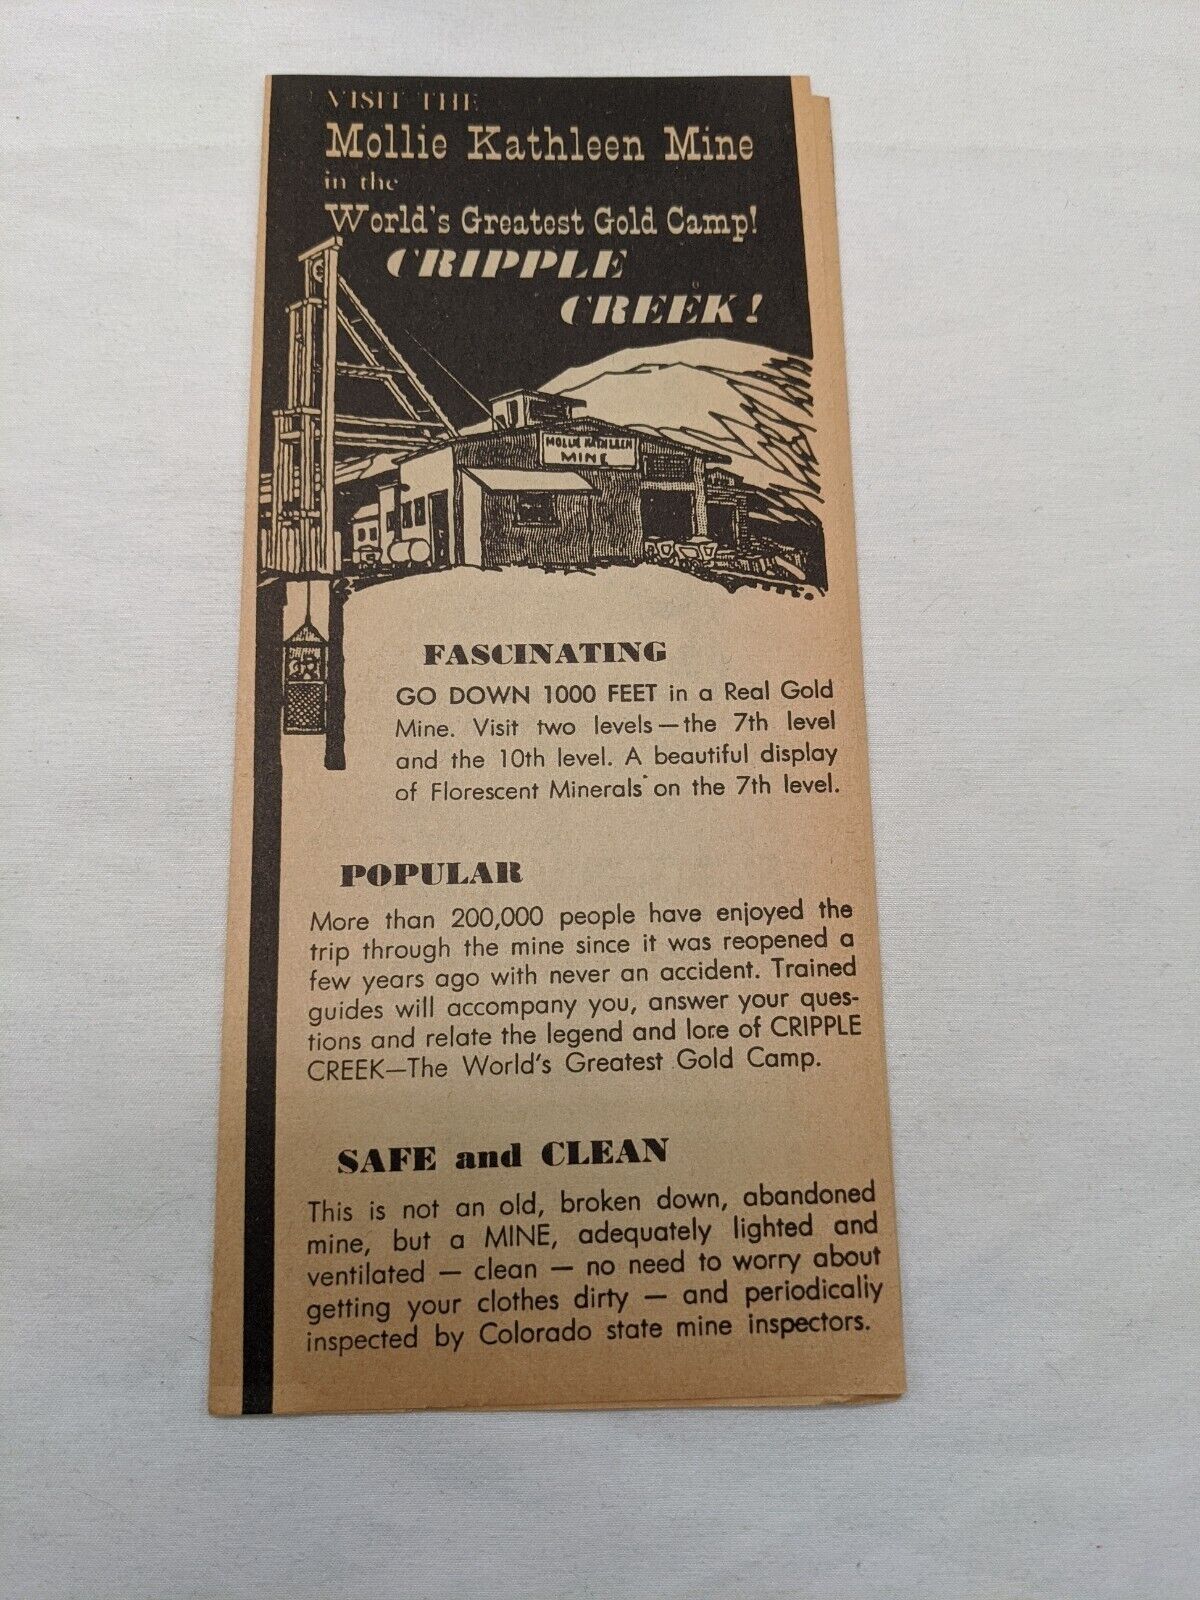 Mollie Kathleen Mine Cripple Creek Colorado 1966 Travel Brochure